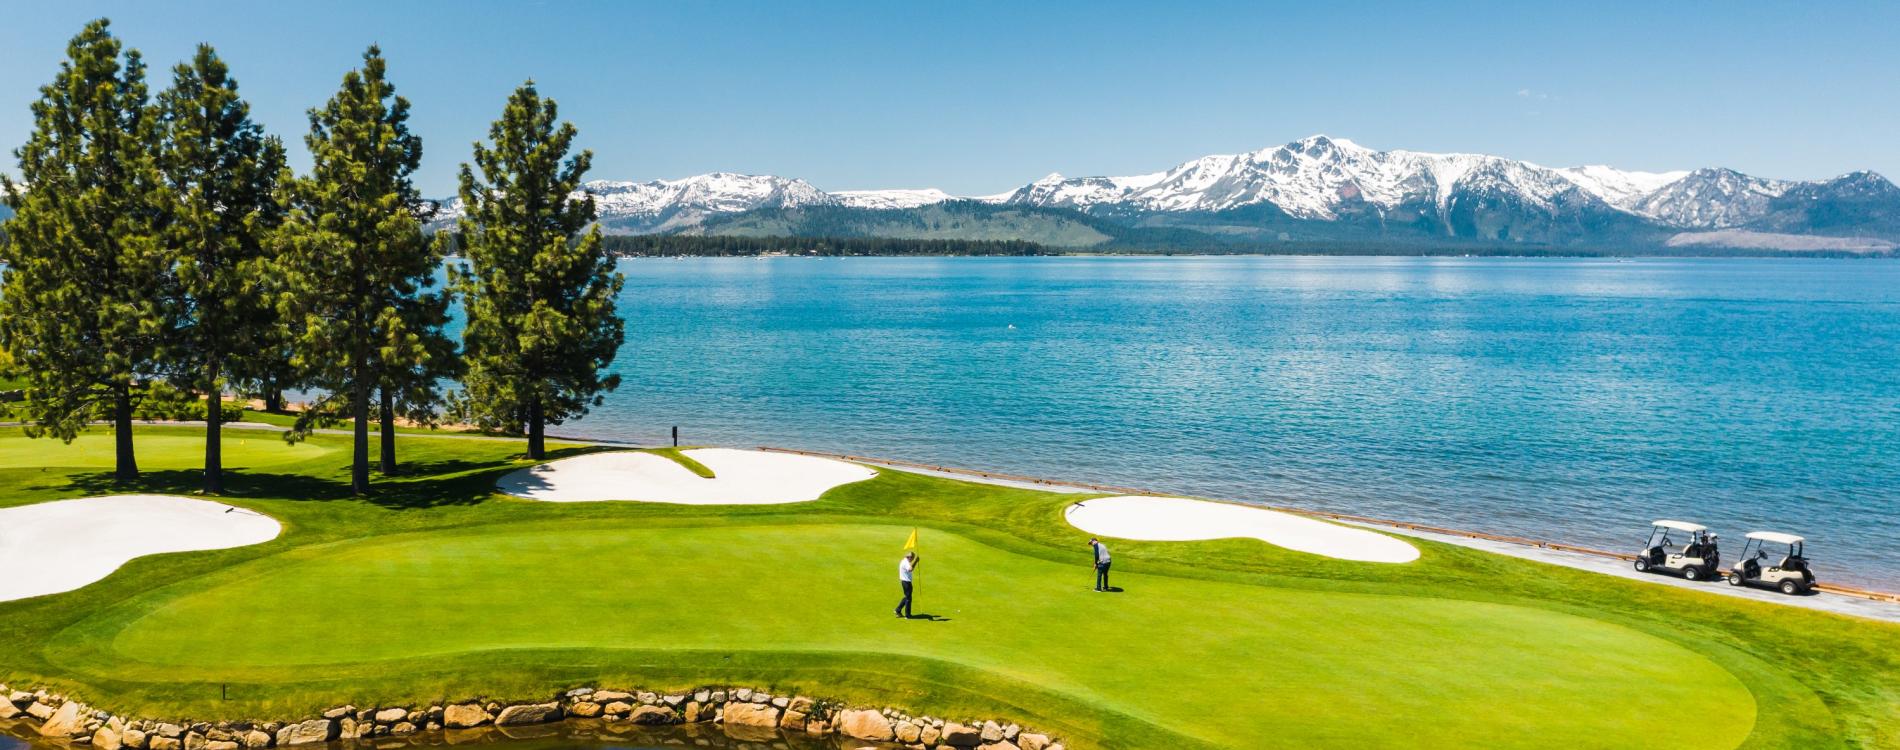 Edgewood Tahoe Resort Golf Course on Lake Tahoe